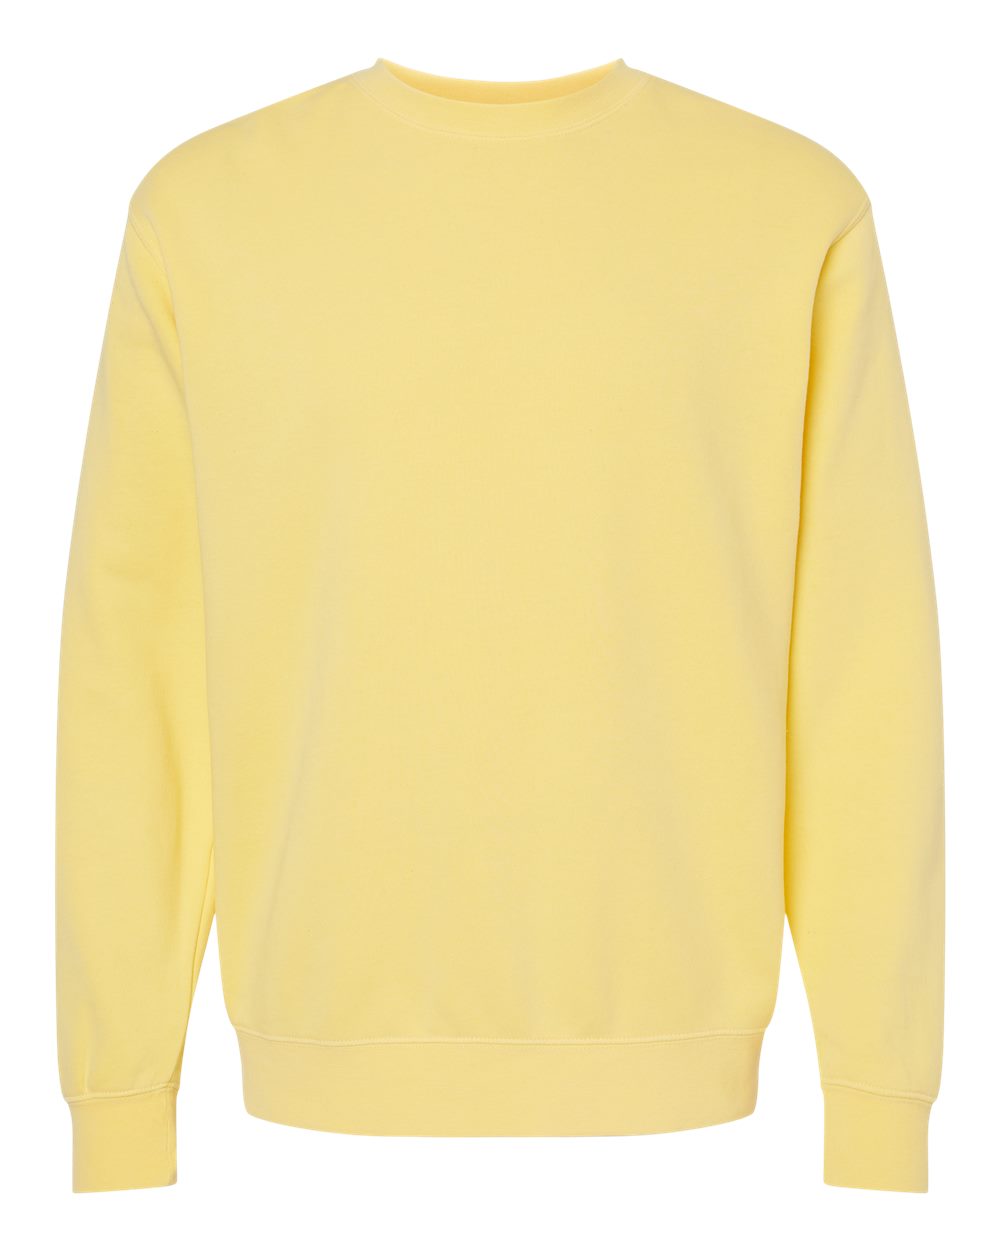 Independent Pigment-Dyed Crewneck Sweatshirt (PRM3500) in Pigment Yellow